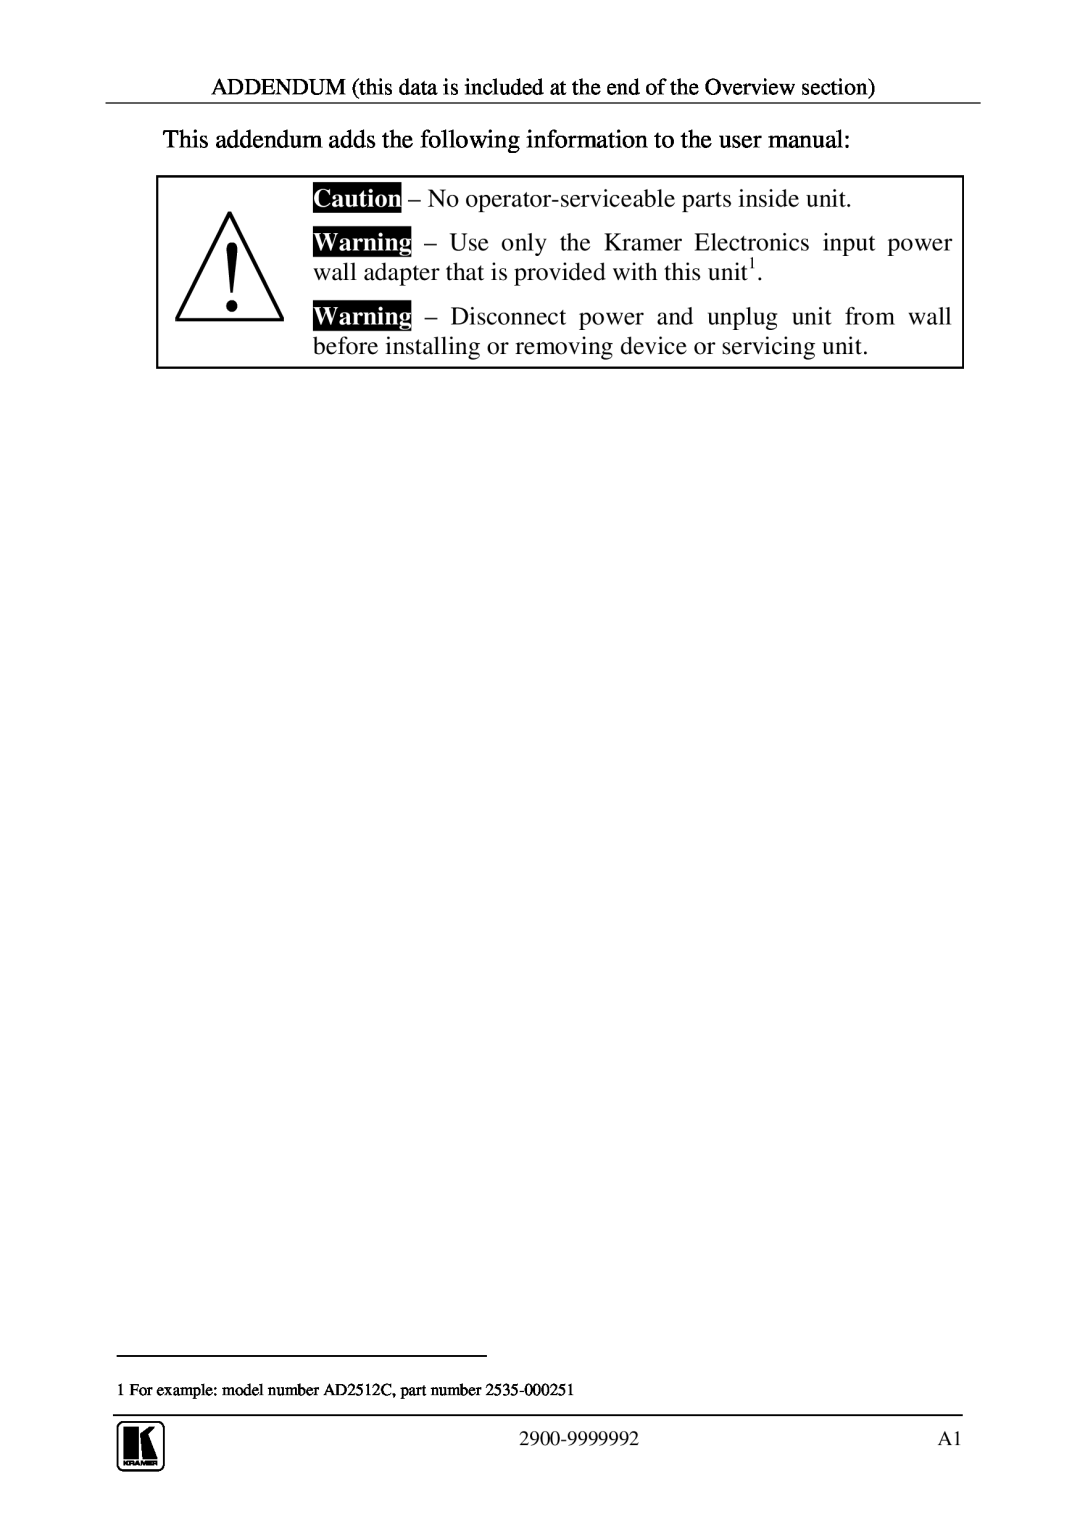 Kramer Electronics user manual 2900-9999992, For example model number AD2512C, part number 